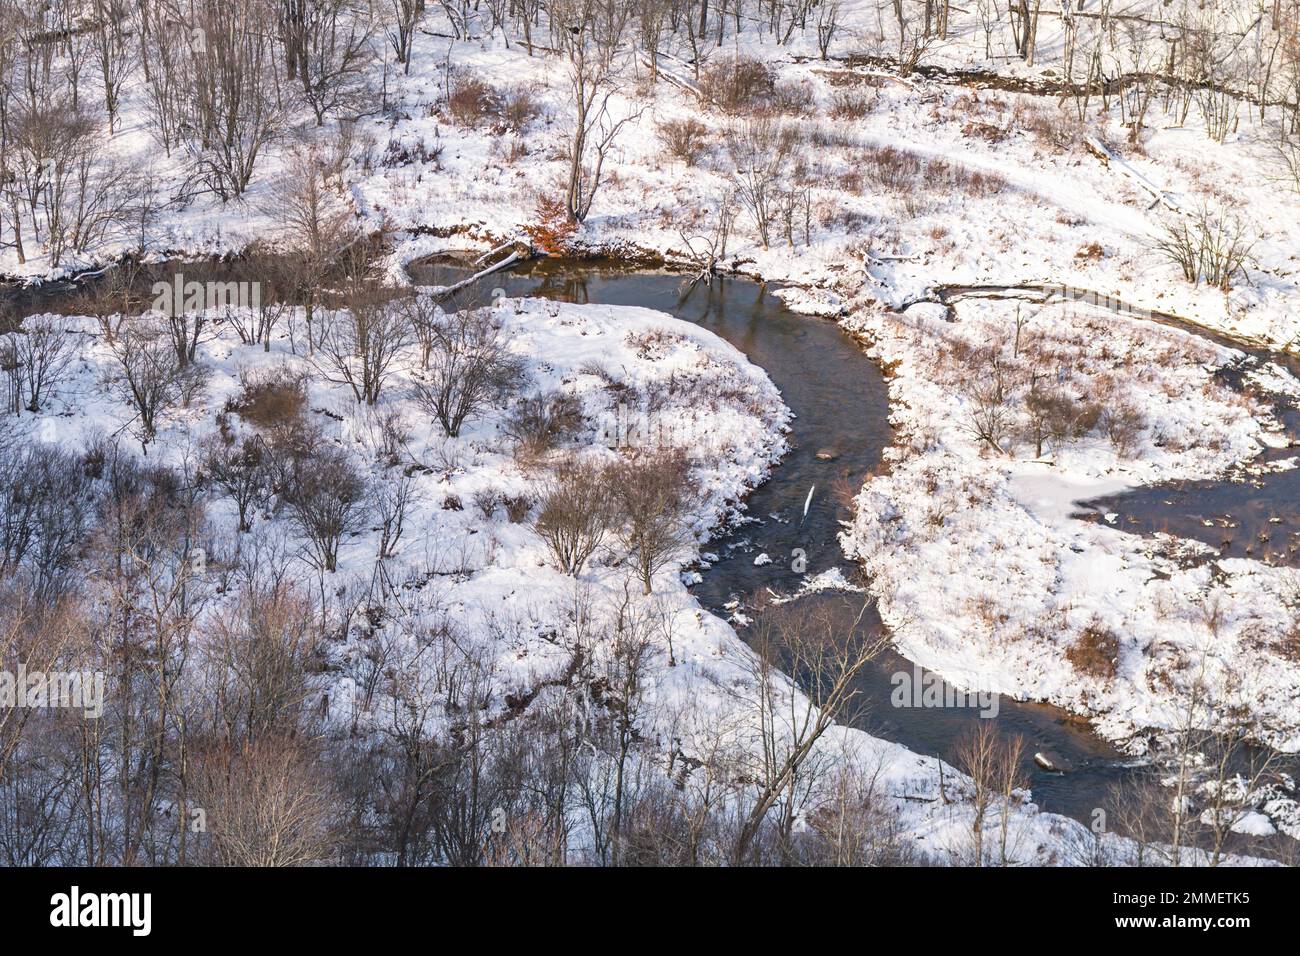 Winter landscape frozen lake outdoors explore copy space natural backgrounds Stock Photo